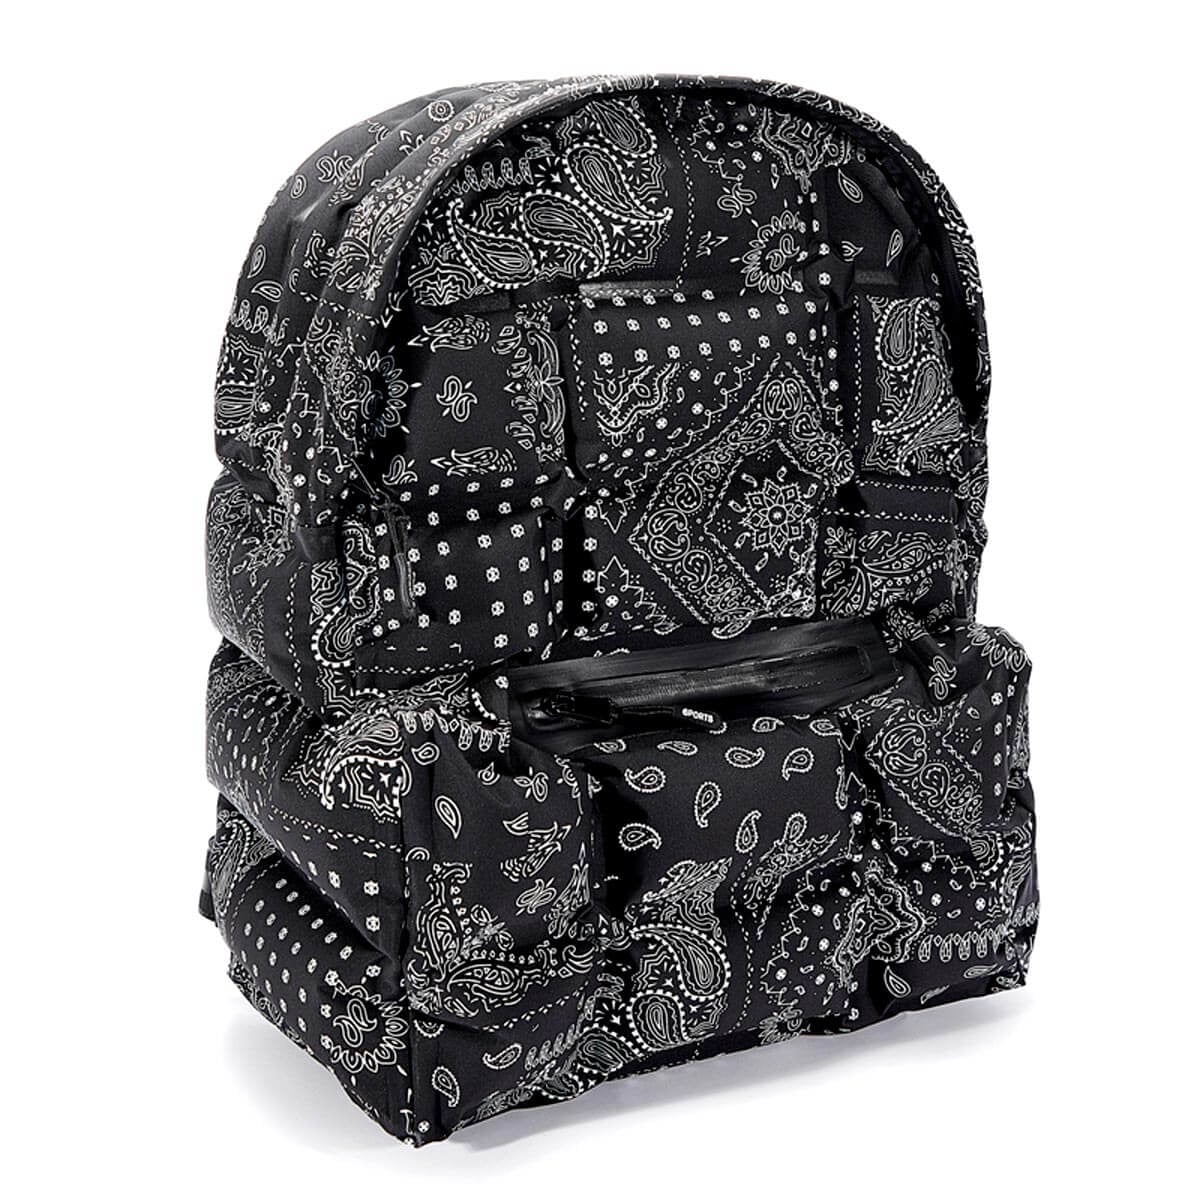 Soft Air-tight Lightweight Fashion Black Gangsta Backpack